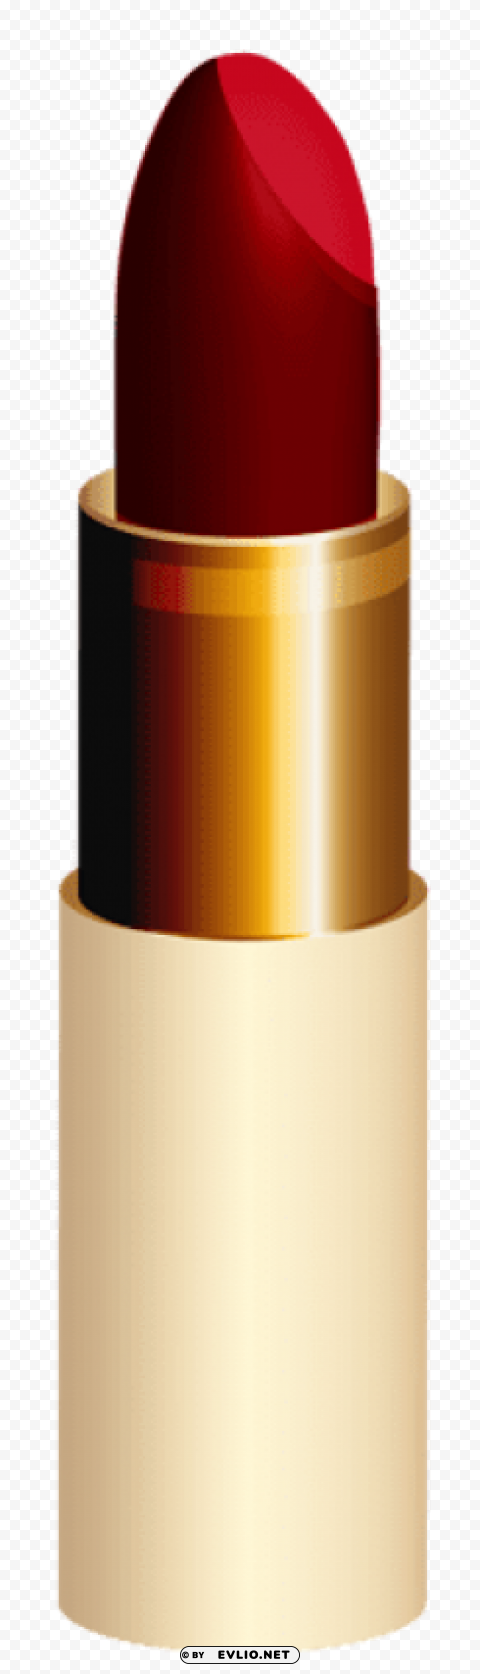 red lipstickpicture High-definition transparent PNG